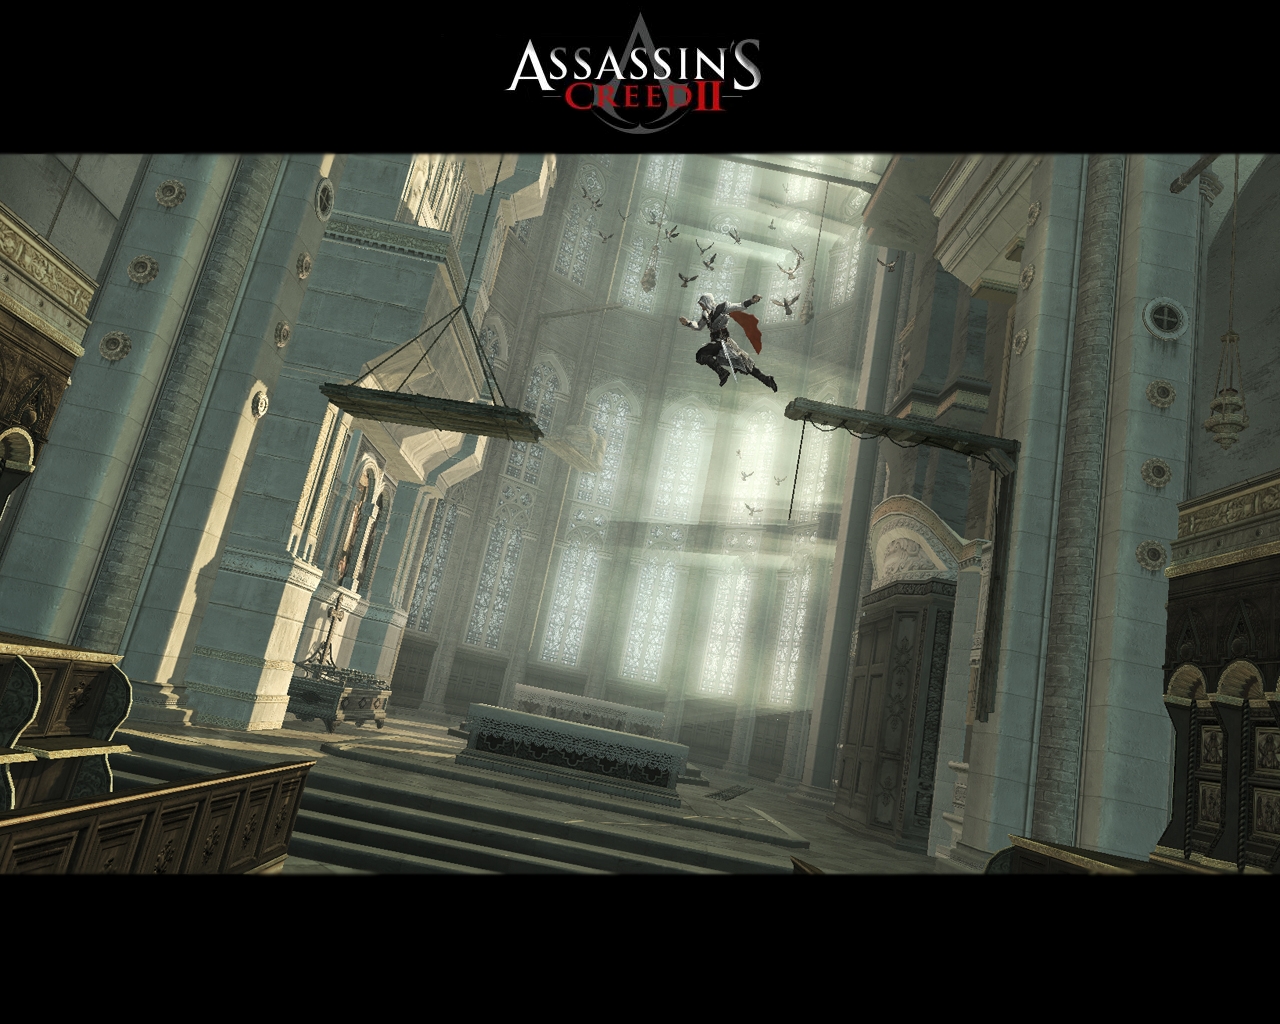 Baby assassins 2. Ассасин Крид 2. Assassins Creed 2 склеп Аудиторе. Assassins Creed 2 screenshots. Assassin’s Creed (игра) 2007.